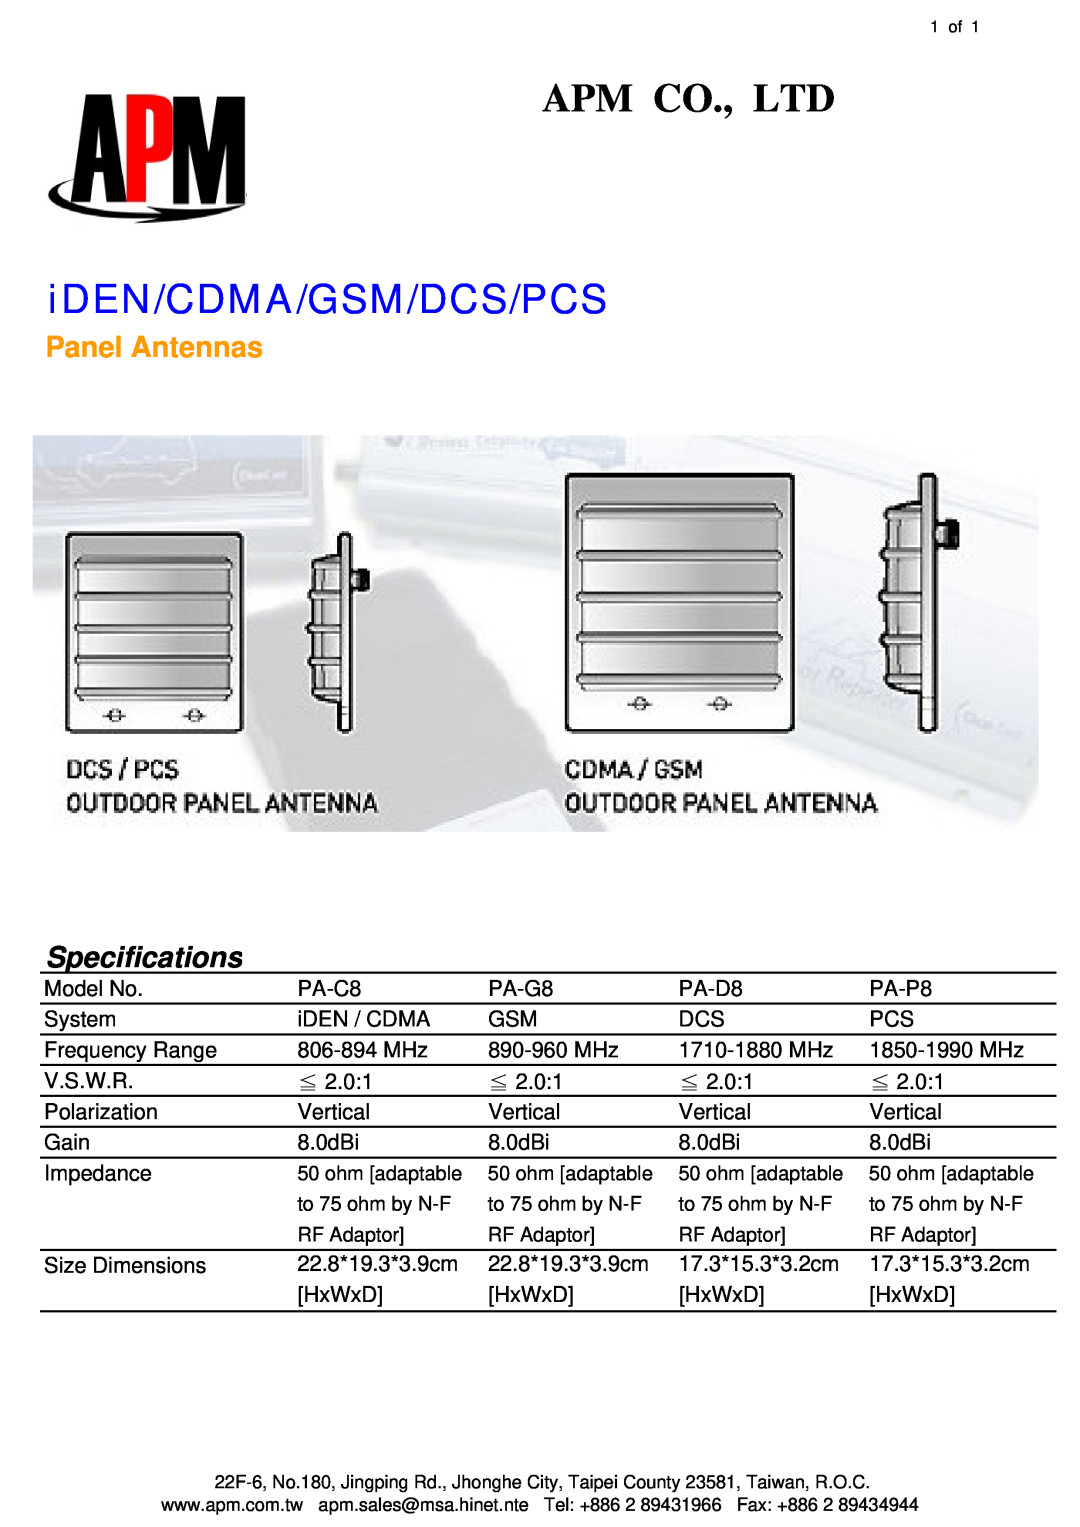 APM PA-G8, PA-P8, PA-D8, PA-C8 specifications iDEN/CDMA/GSM/DCS/PCS, Panel Antennas, Specifications 